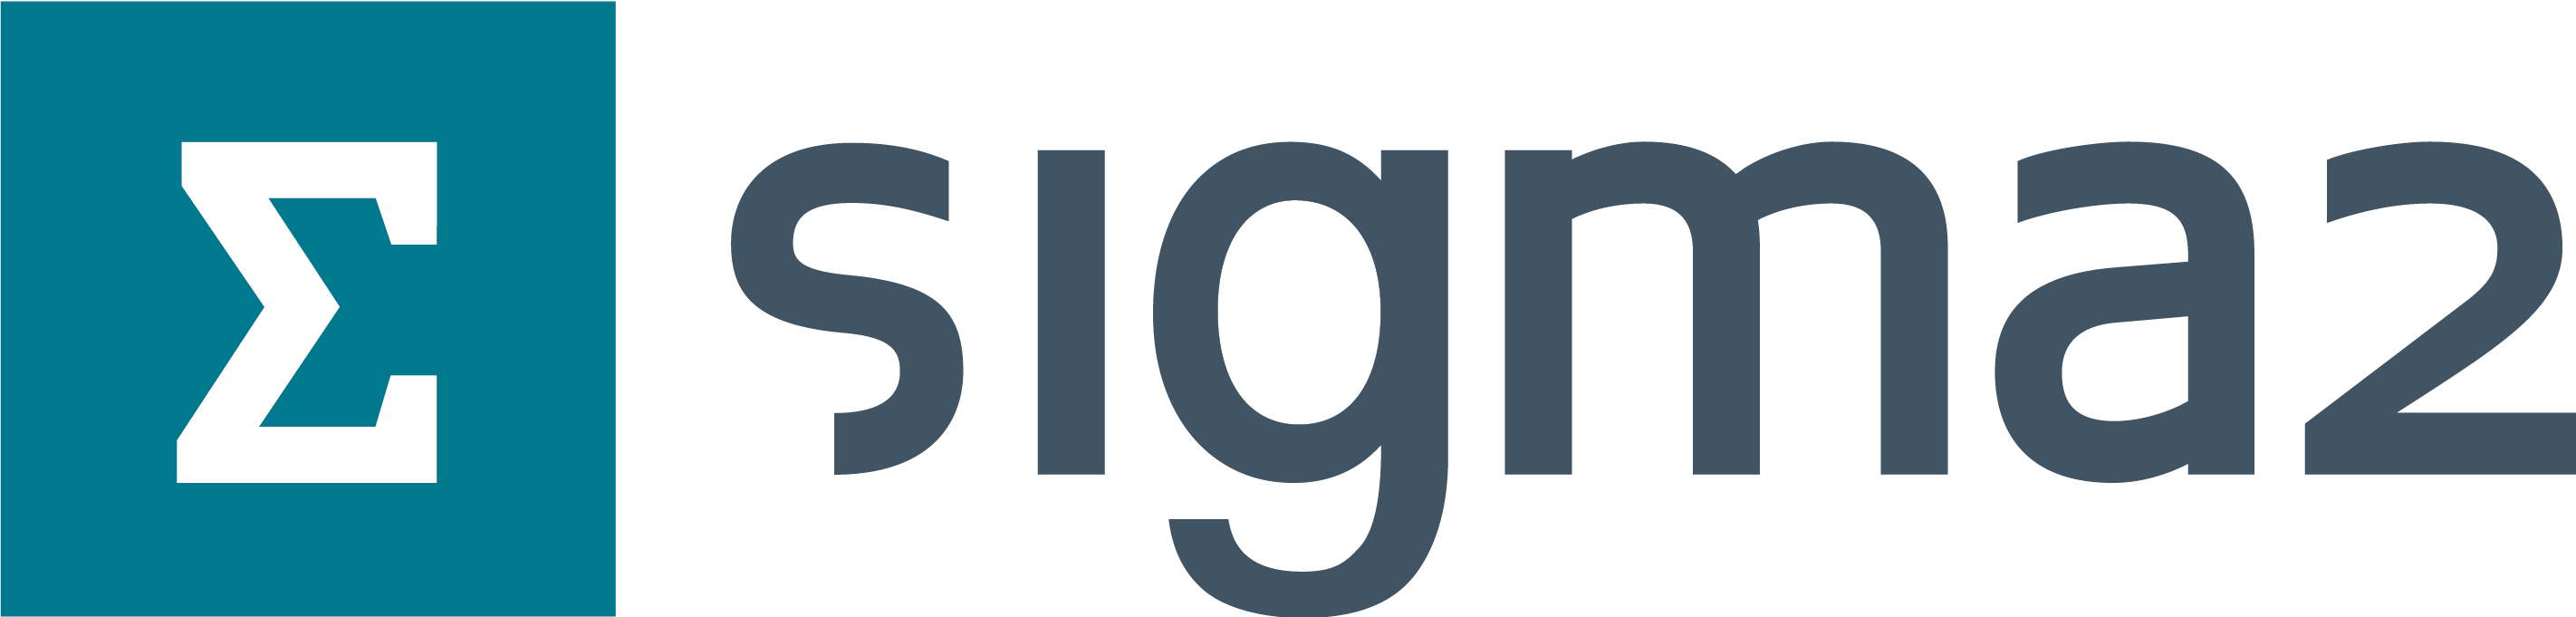 Sigma2 logo